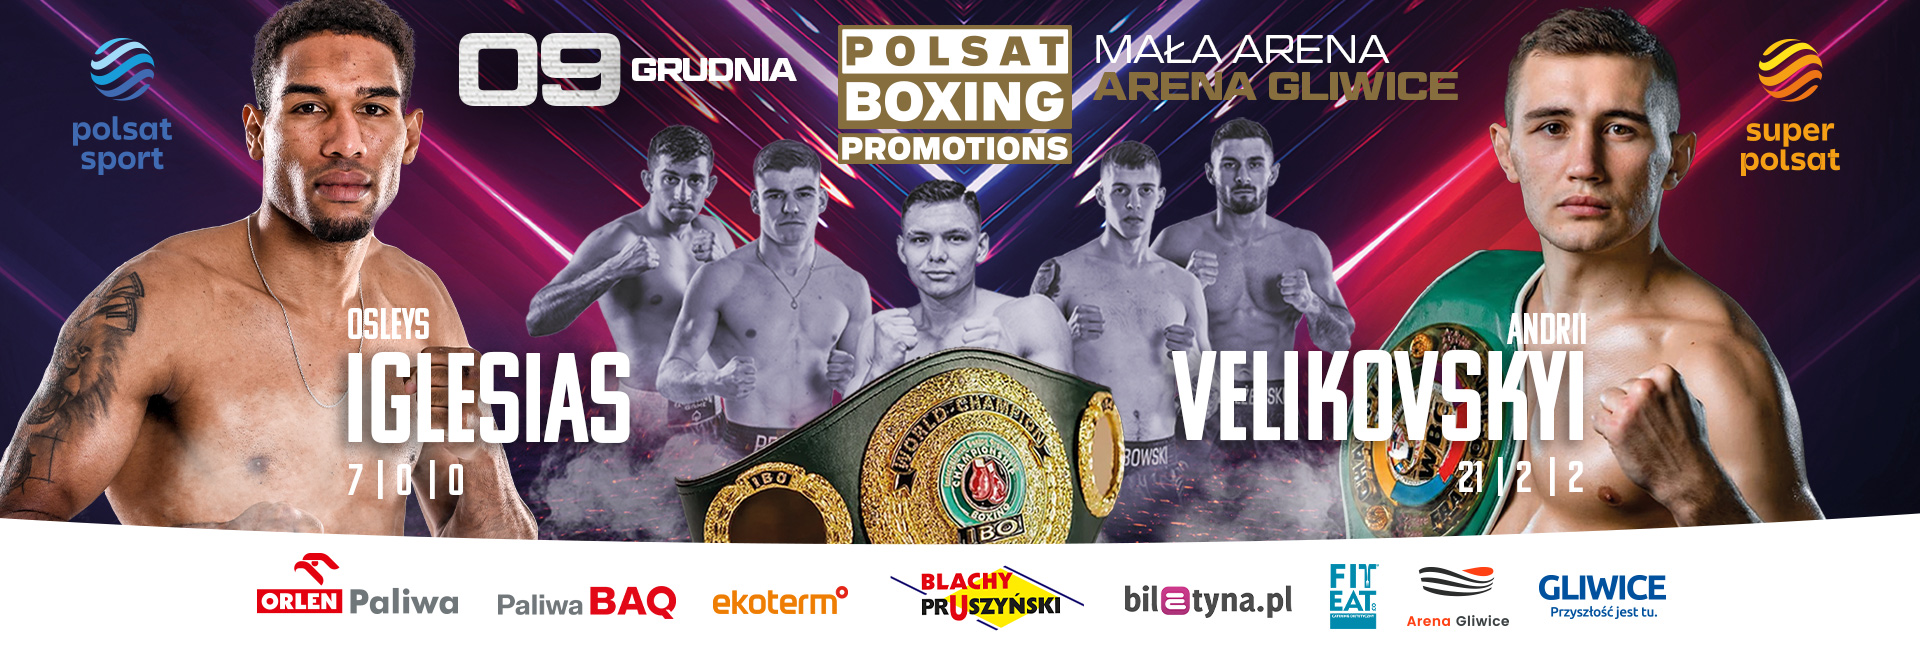 Polsat Boxing Promotions 13